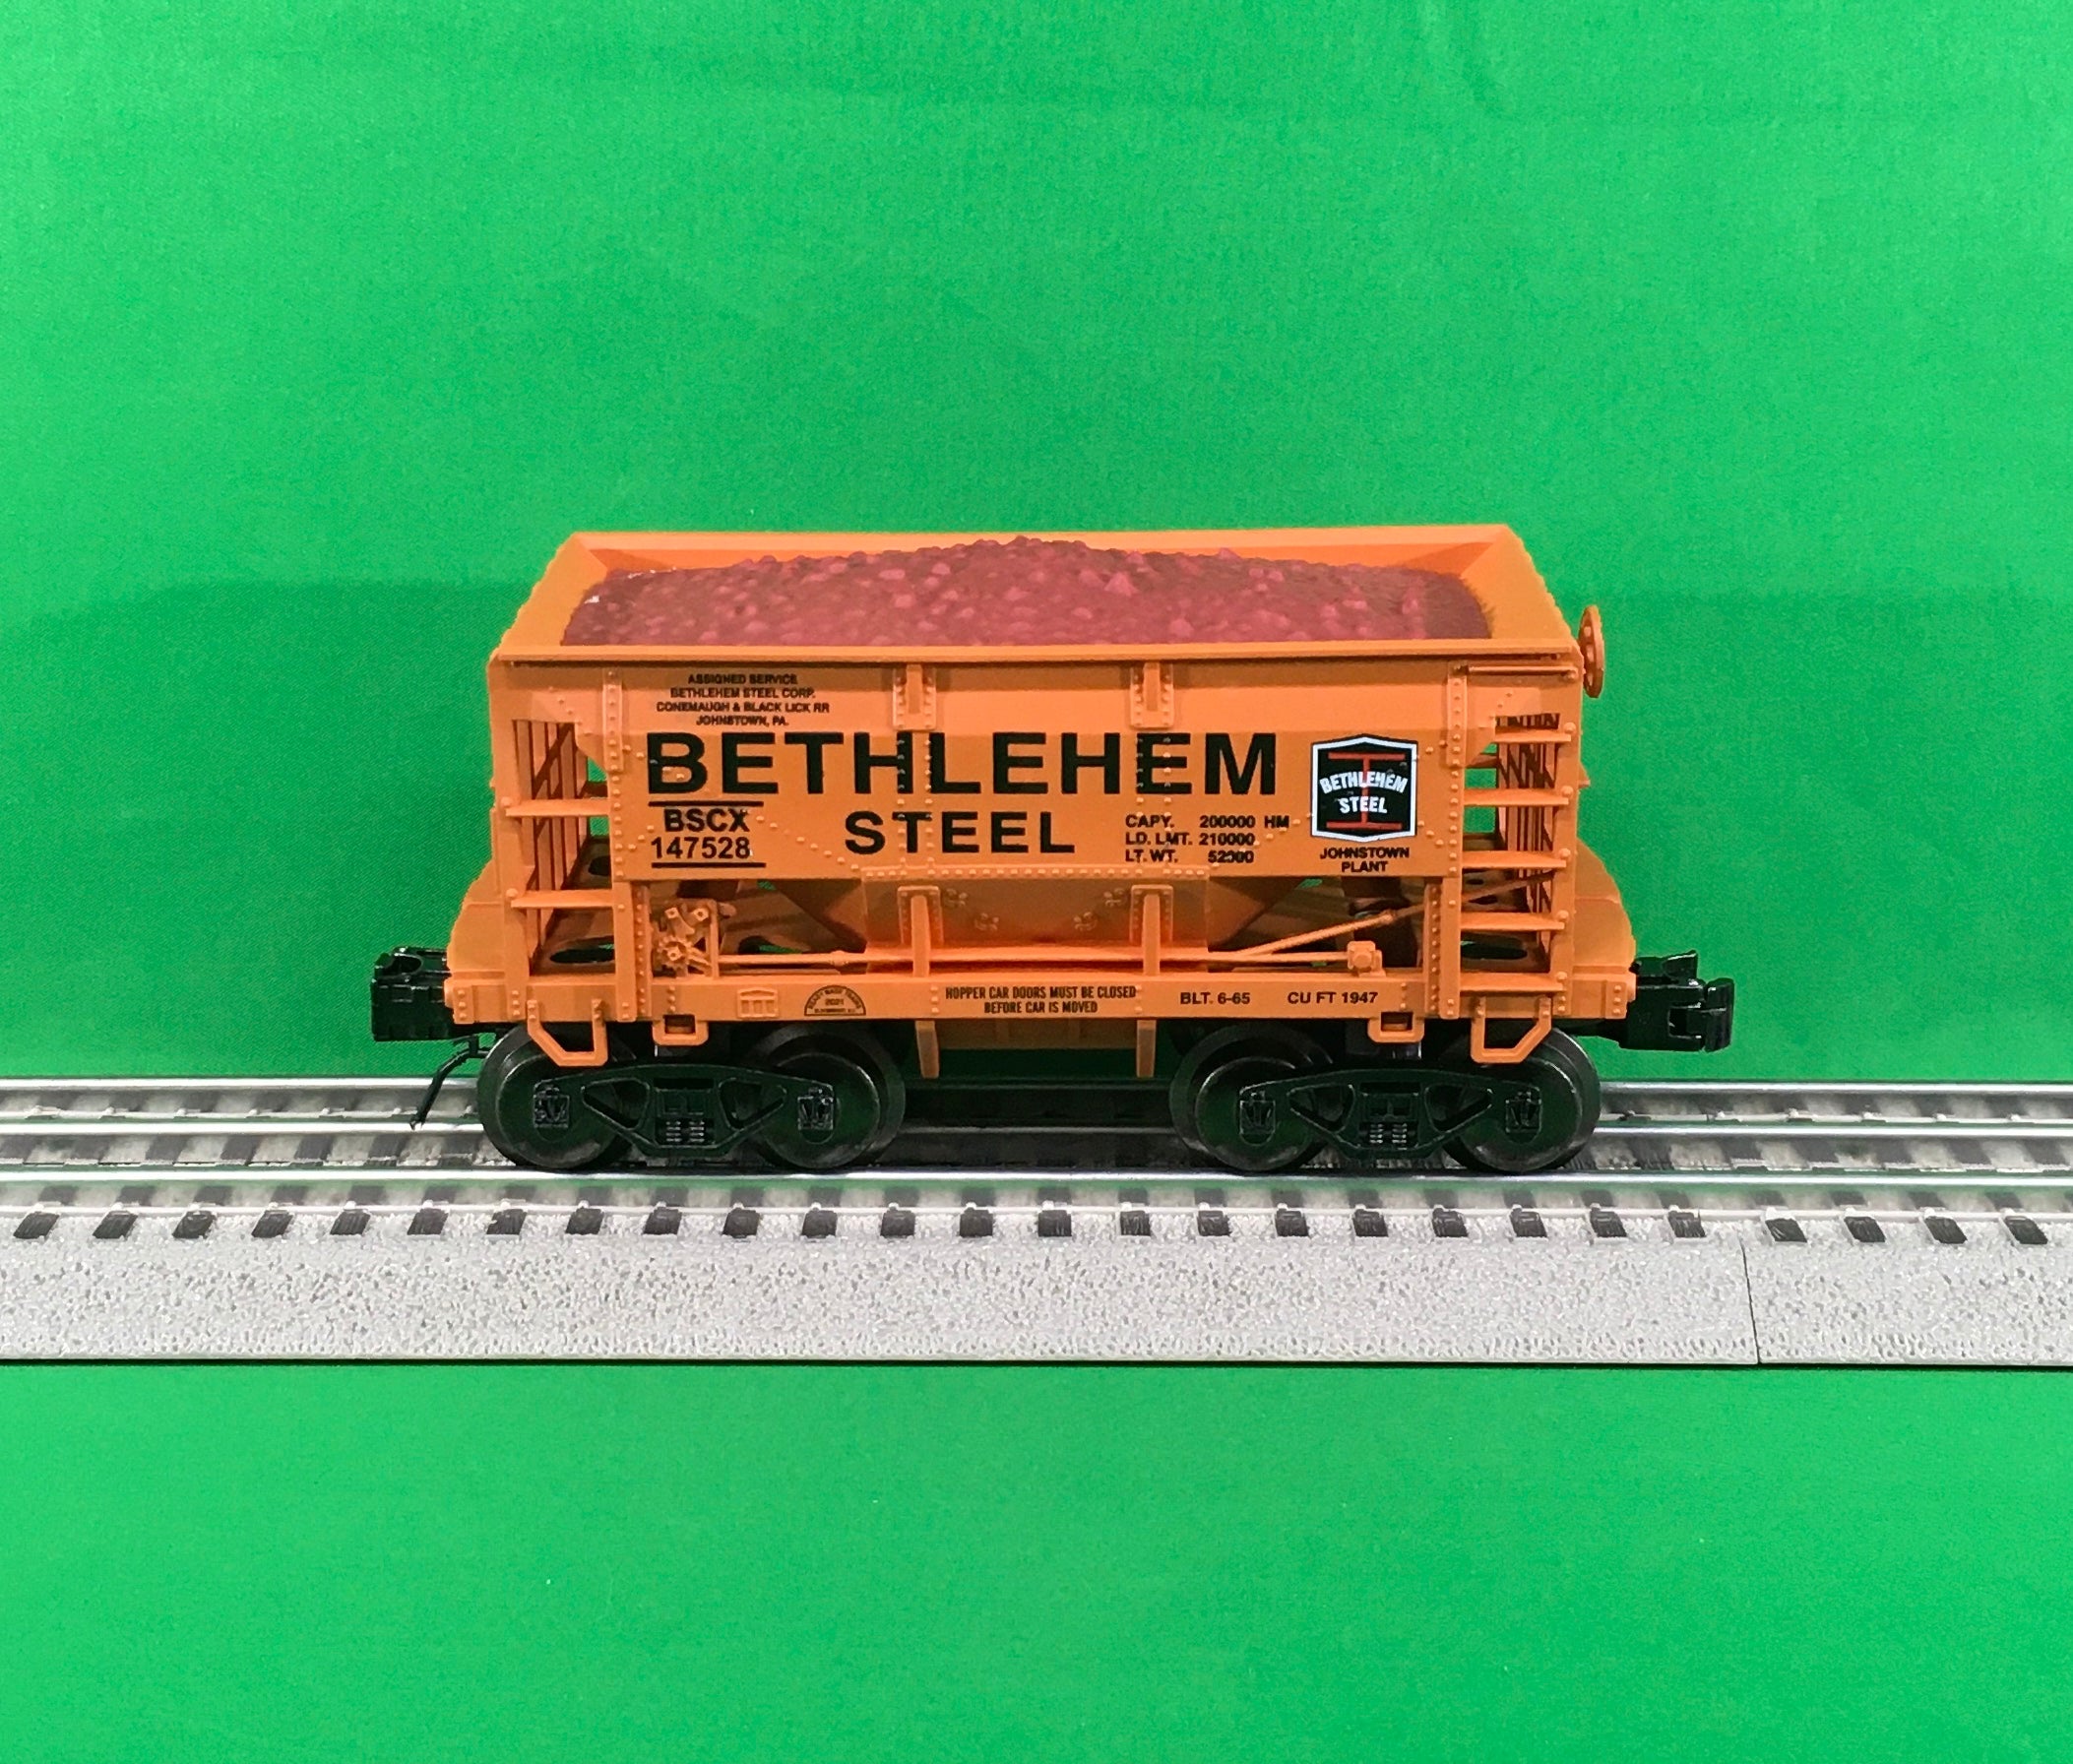 Ready Made Trains RMT-96719-221 - Ore Car "Bethlehem Steel" (Johnstown, PA Plant)